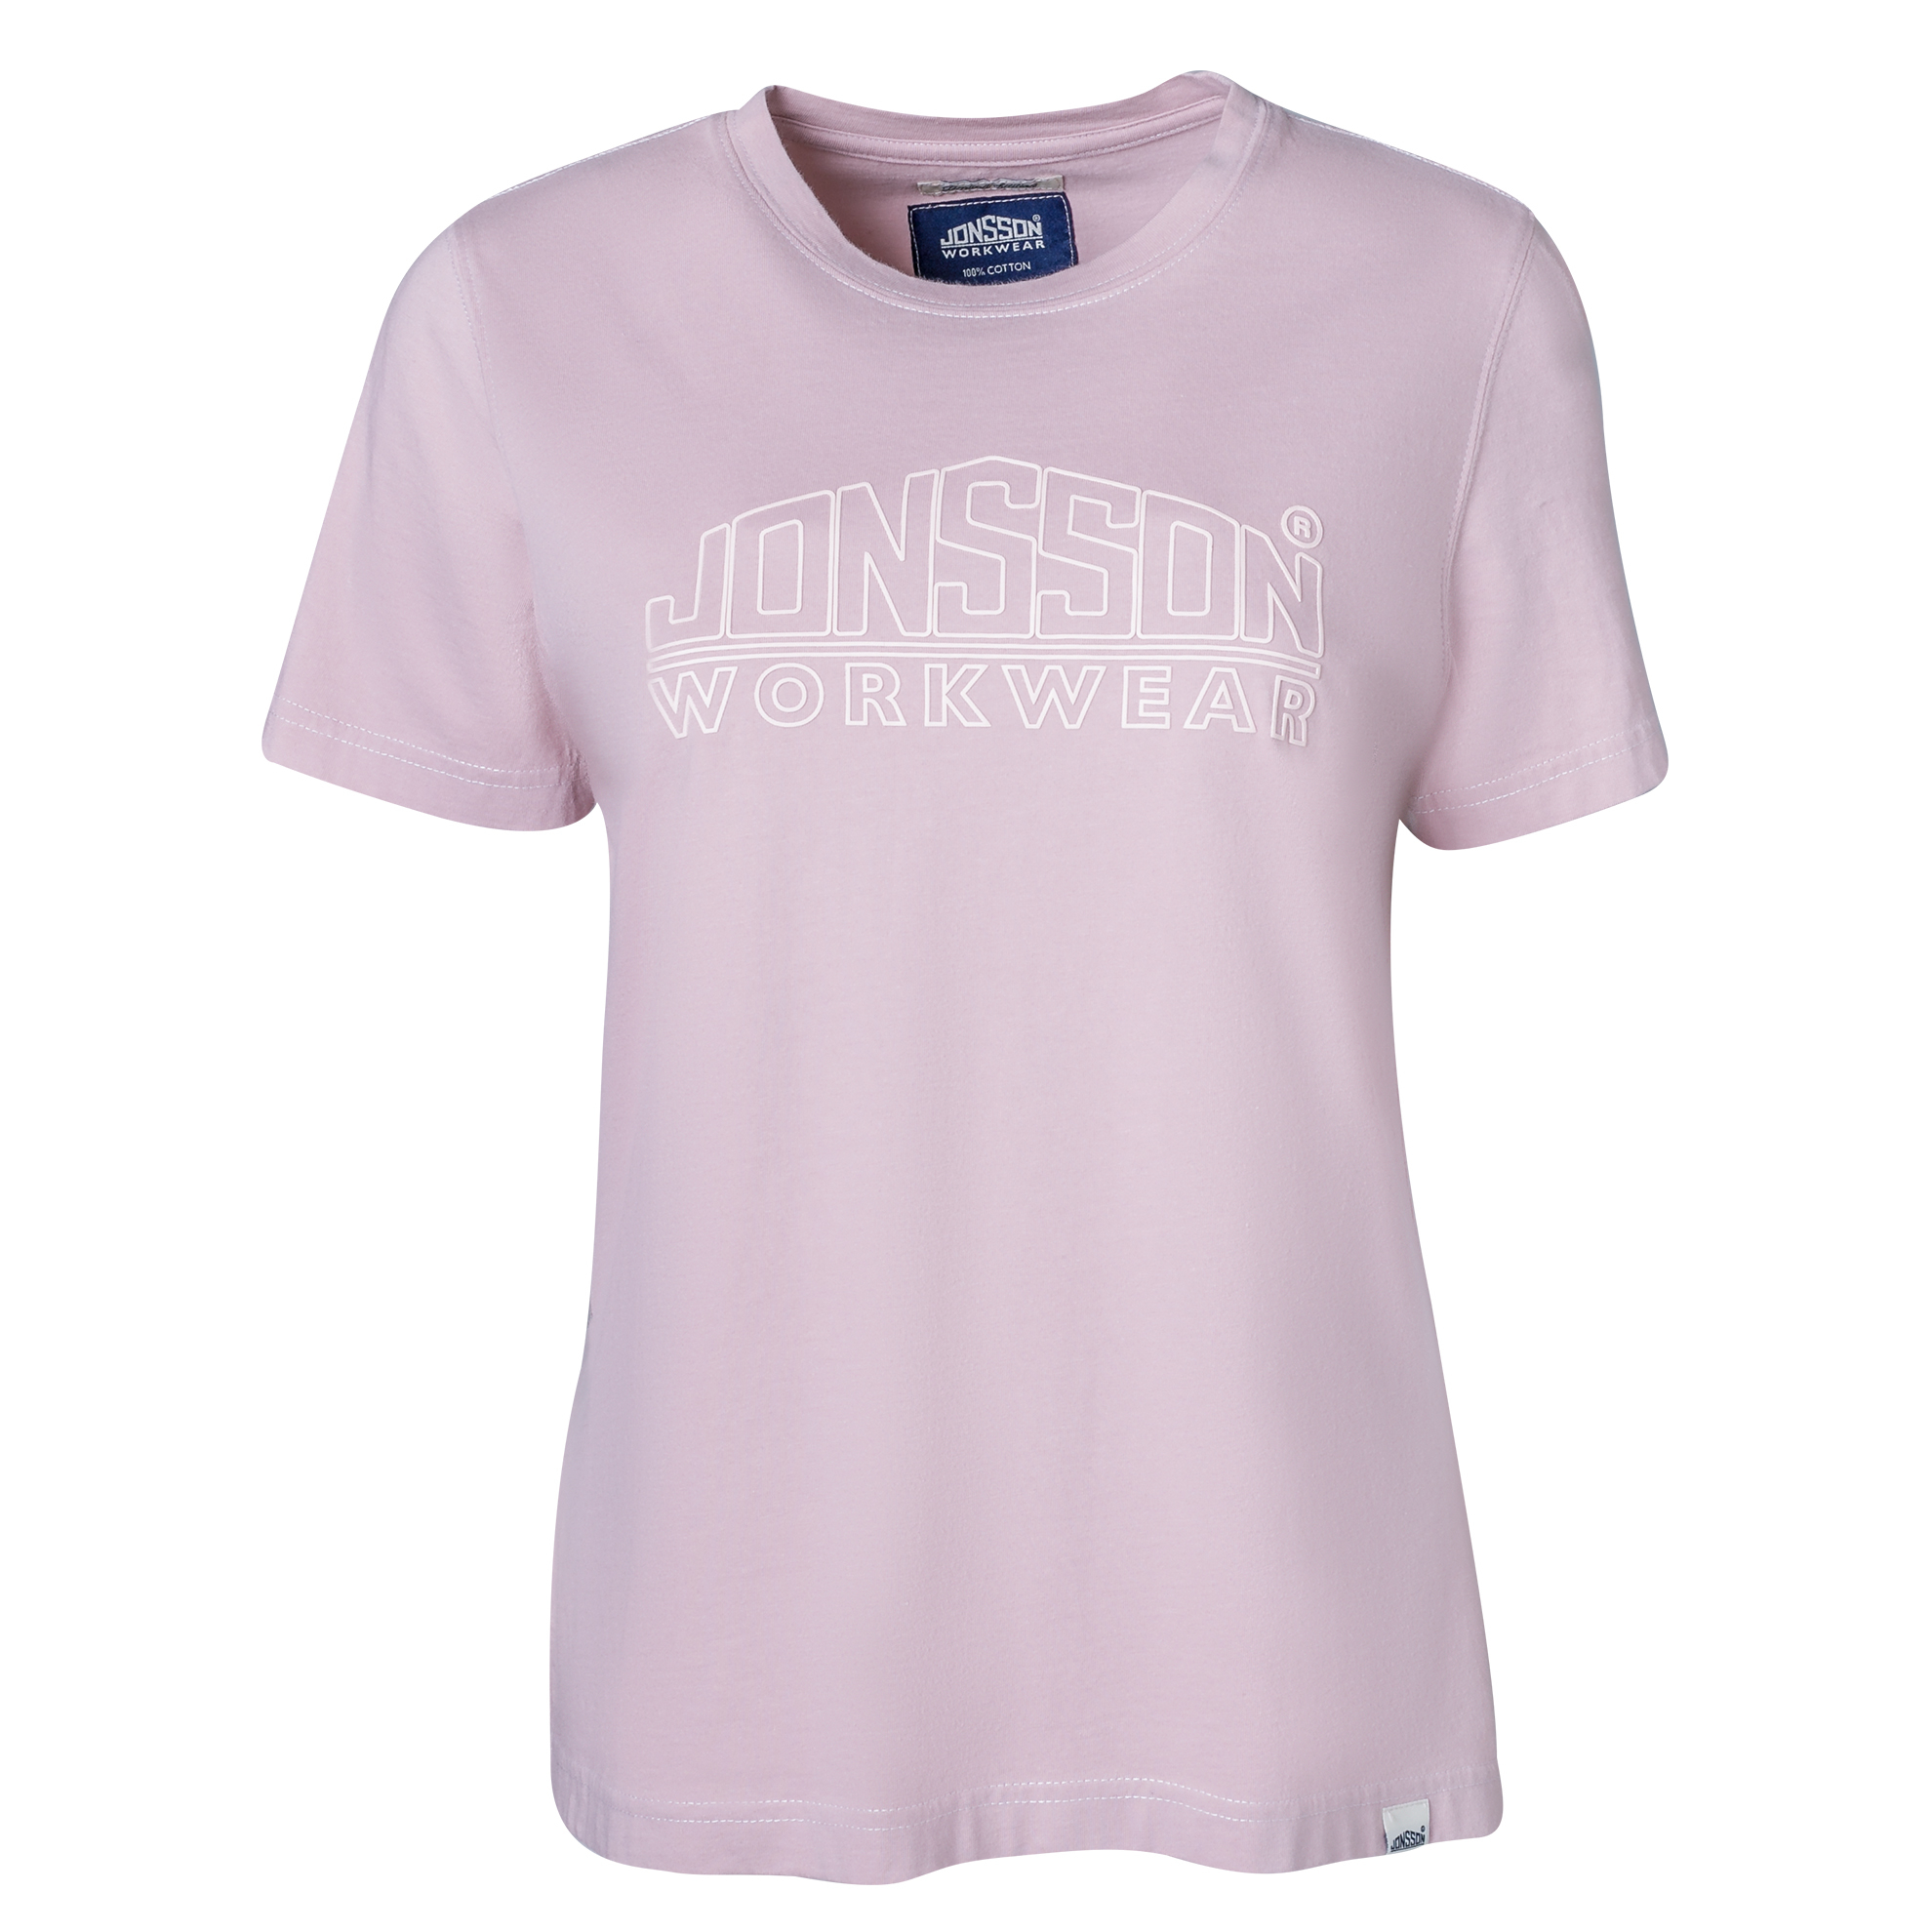 Jonsson Workwear | Limited Edition Logo Print Tee